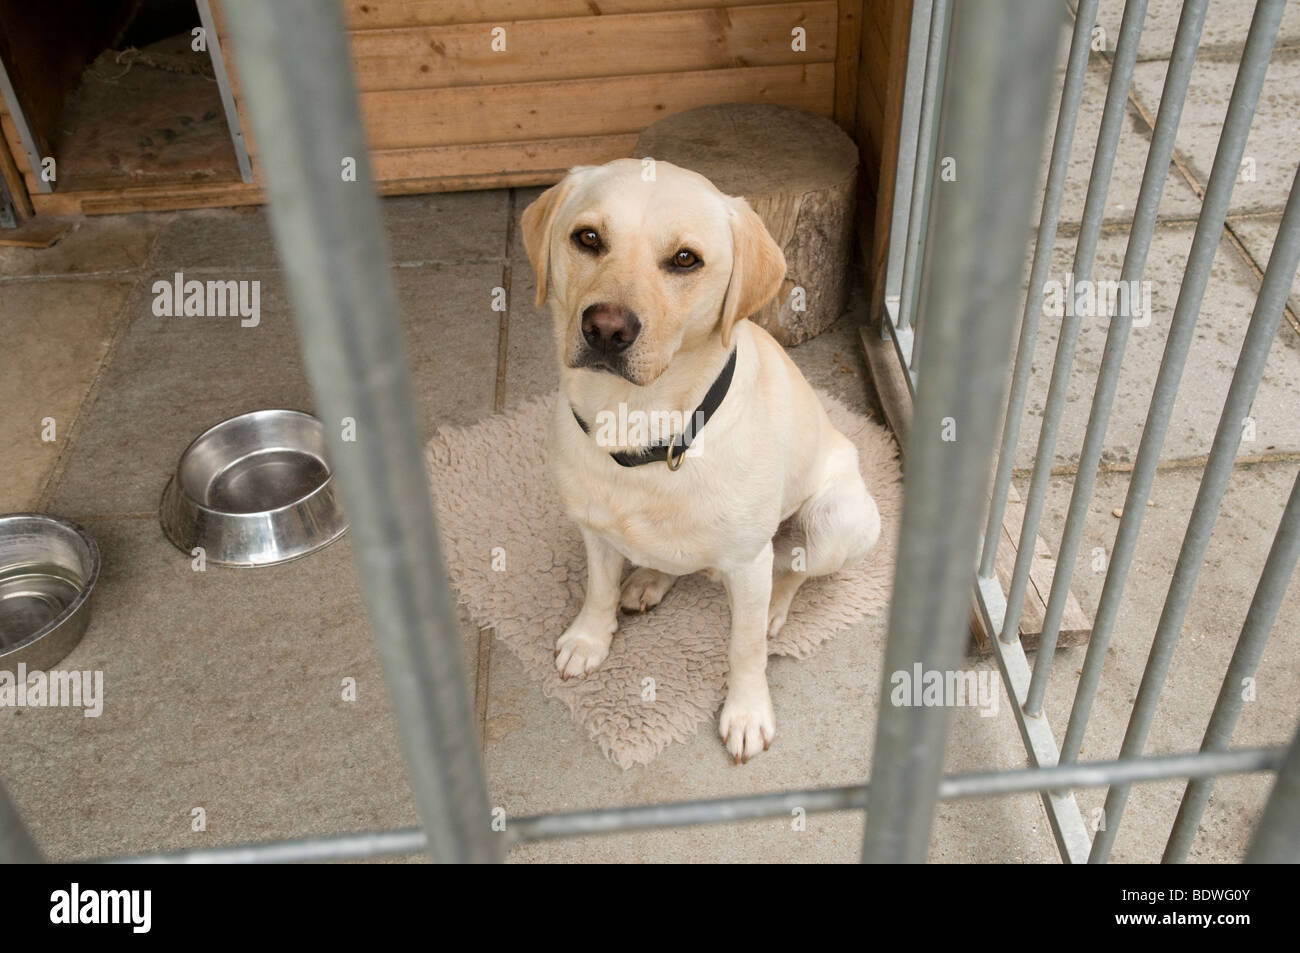 Labrador dog sitting in a dog kennel Stock Photo